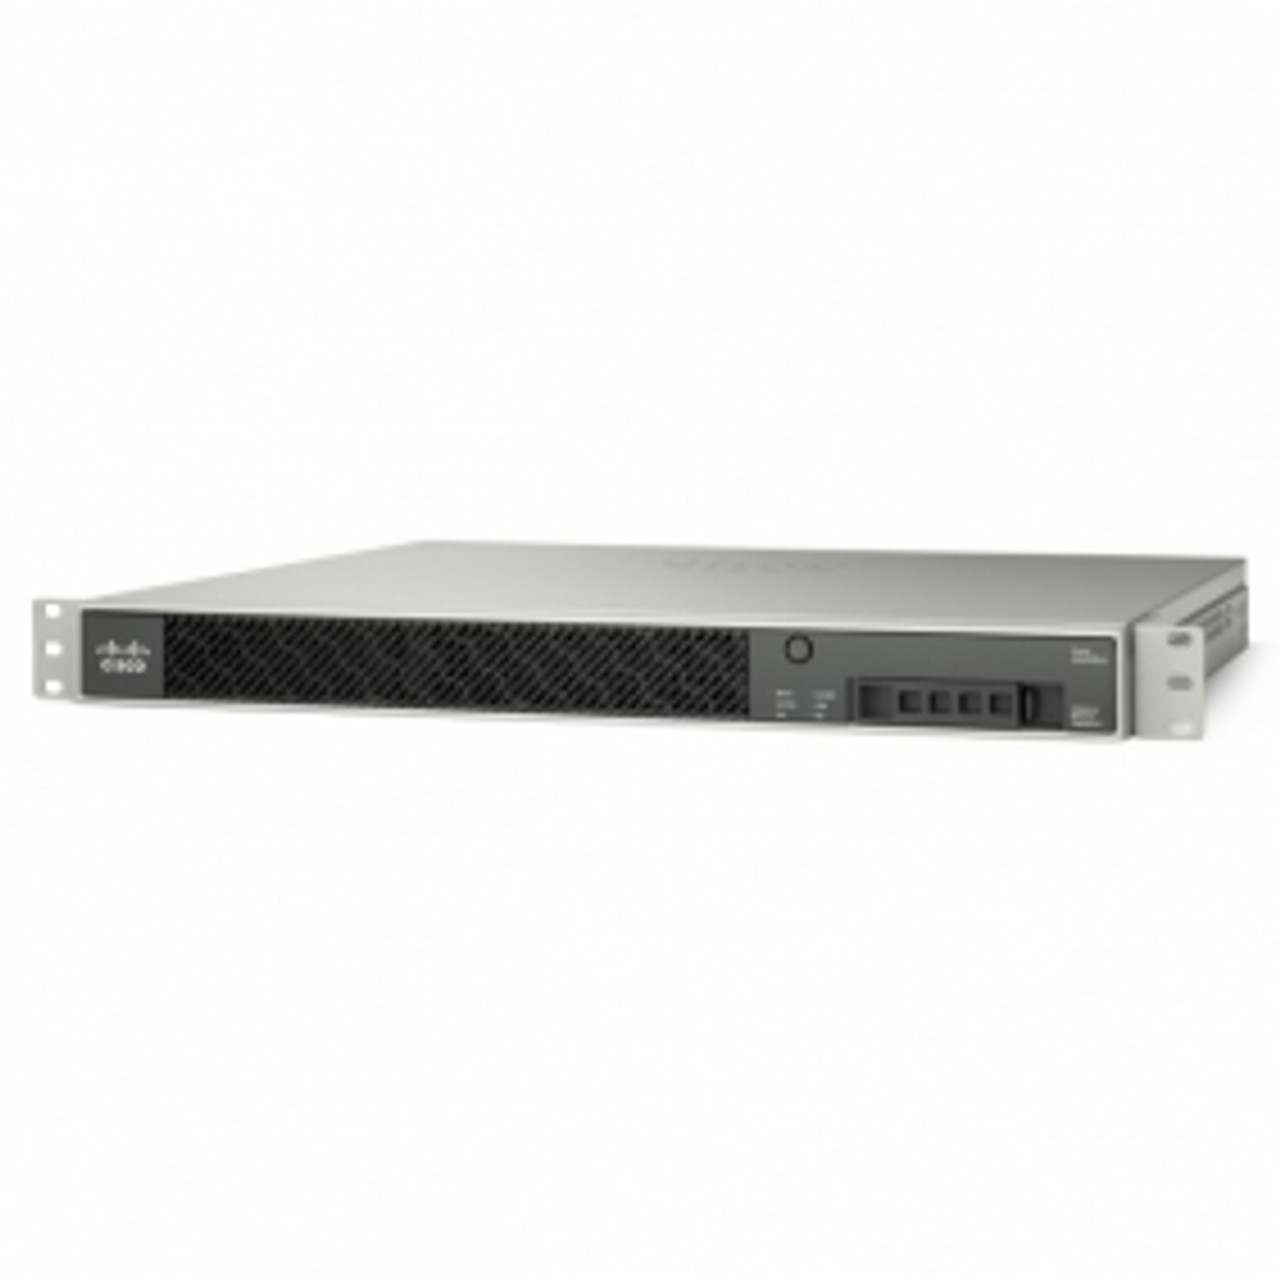 ASA5515-SSD120-K9 Cisco ASA 5500 Series Firewall Edition Bundle